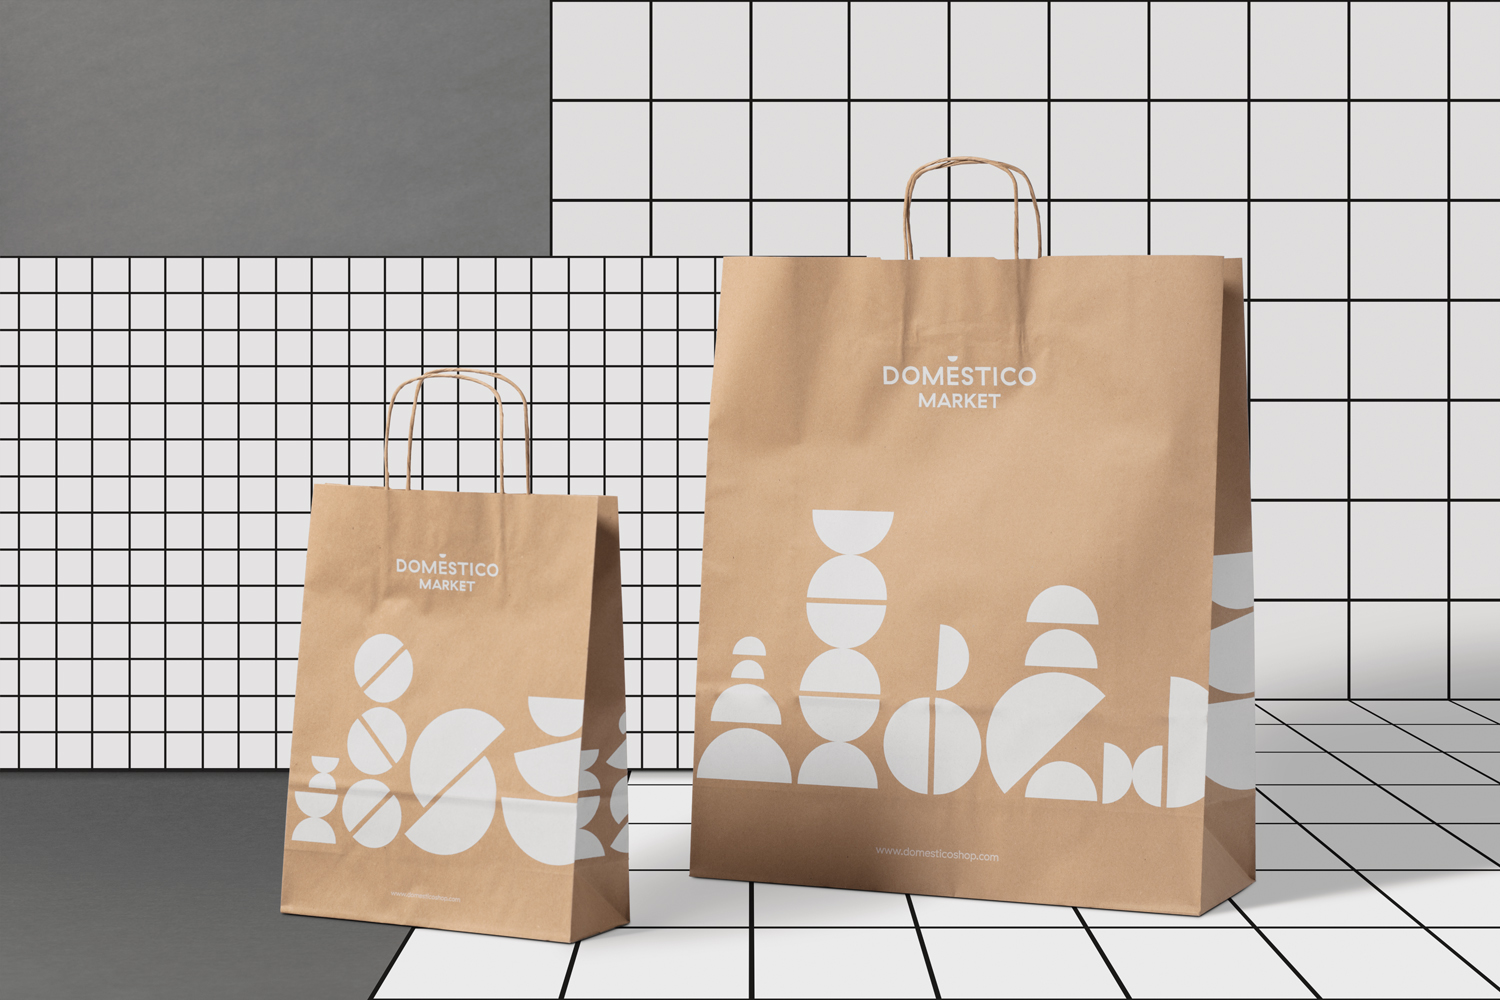 Graphic identity by Mucho for Spanish furniture retailer DomésticoShop's concept store DomésticoMarket